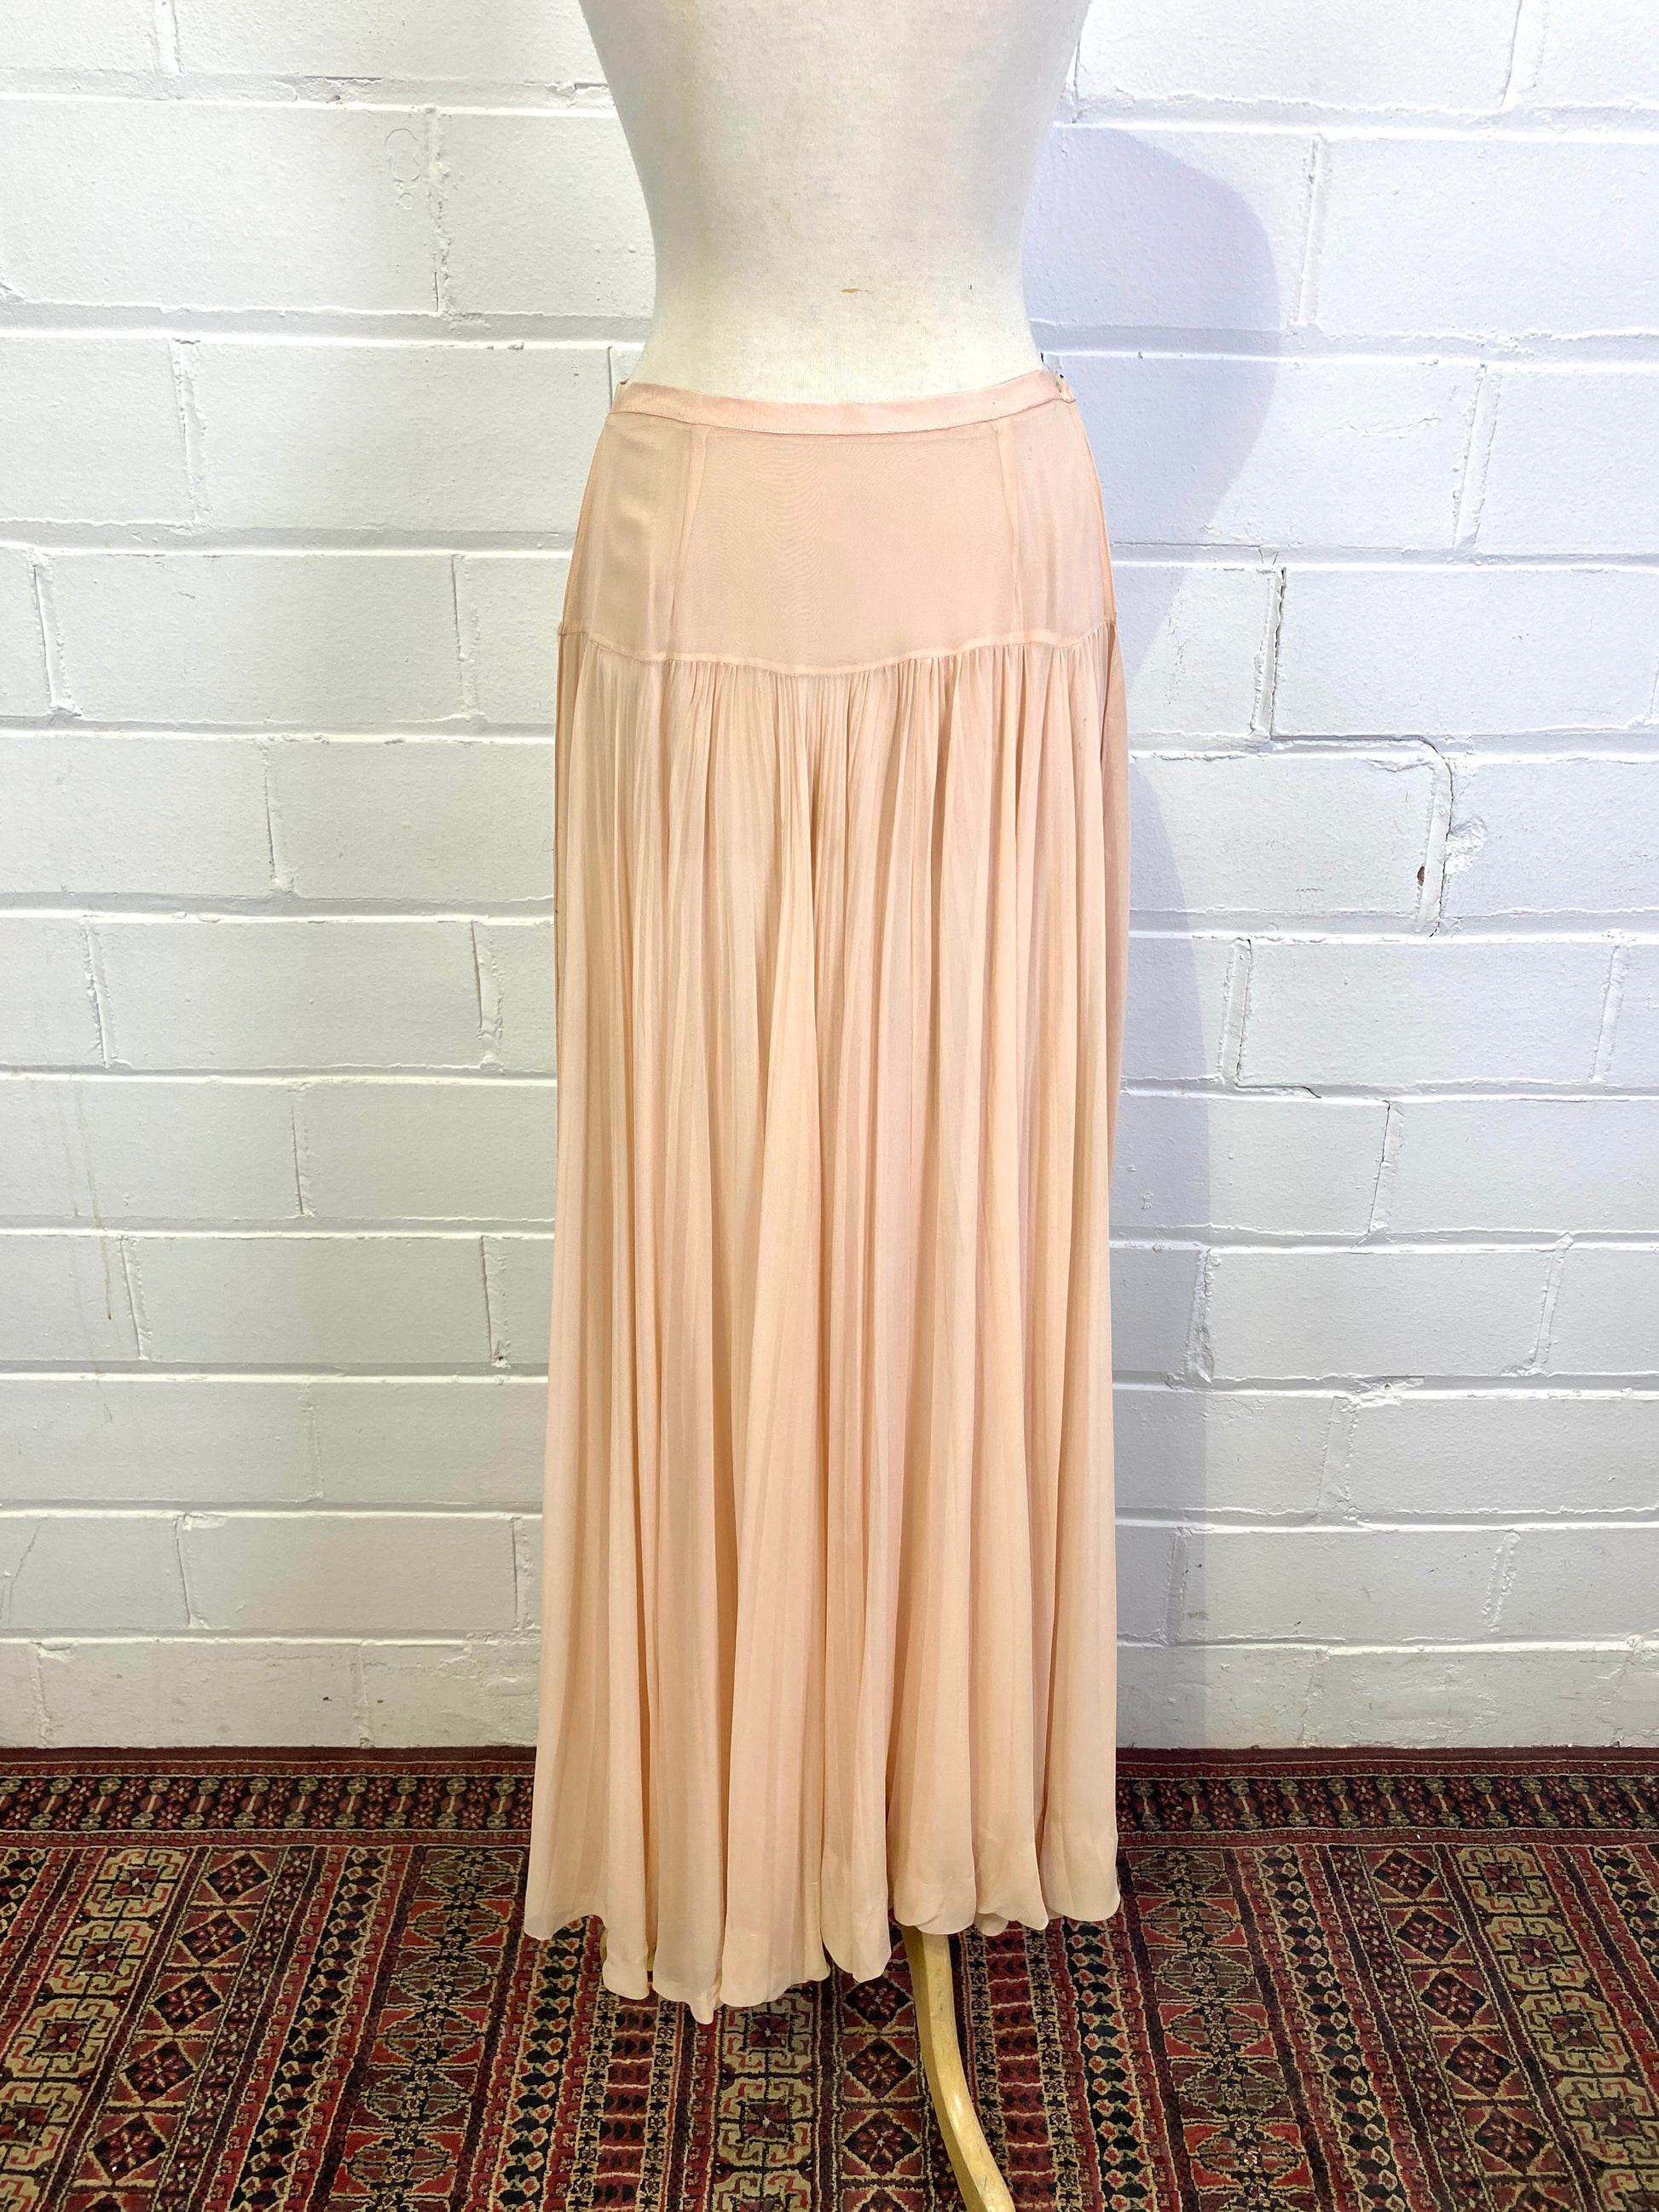 Vintage 1930s Pink Silk Chiffon Half-Skirt/ Underskirt